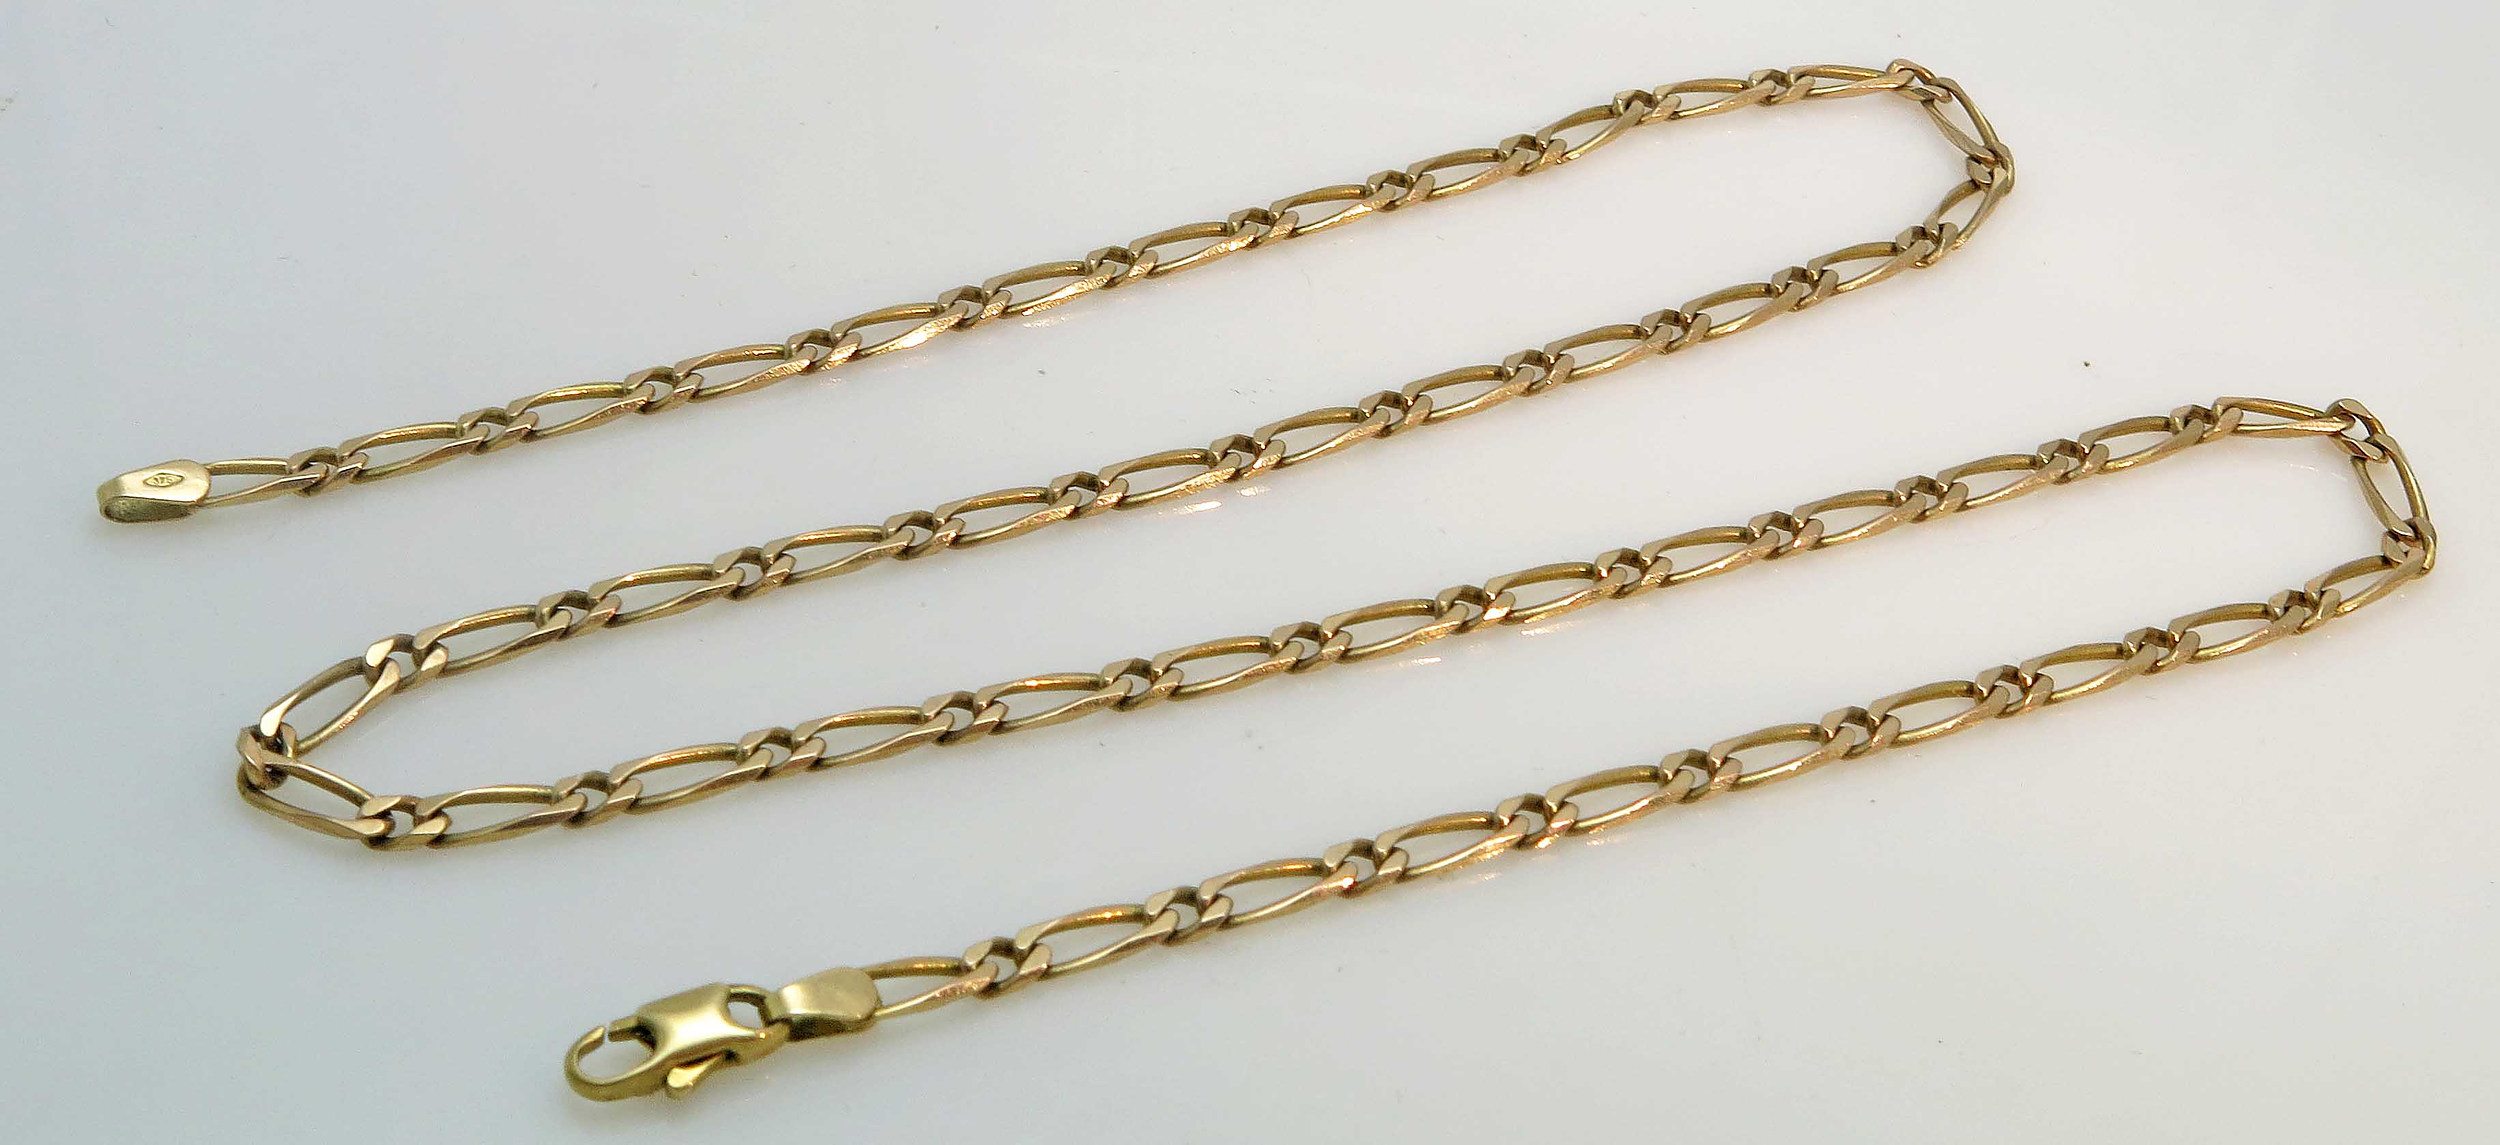 9ct Gold Italian-Made Chain - Lot 1154151 | ALLBIDS